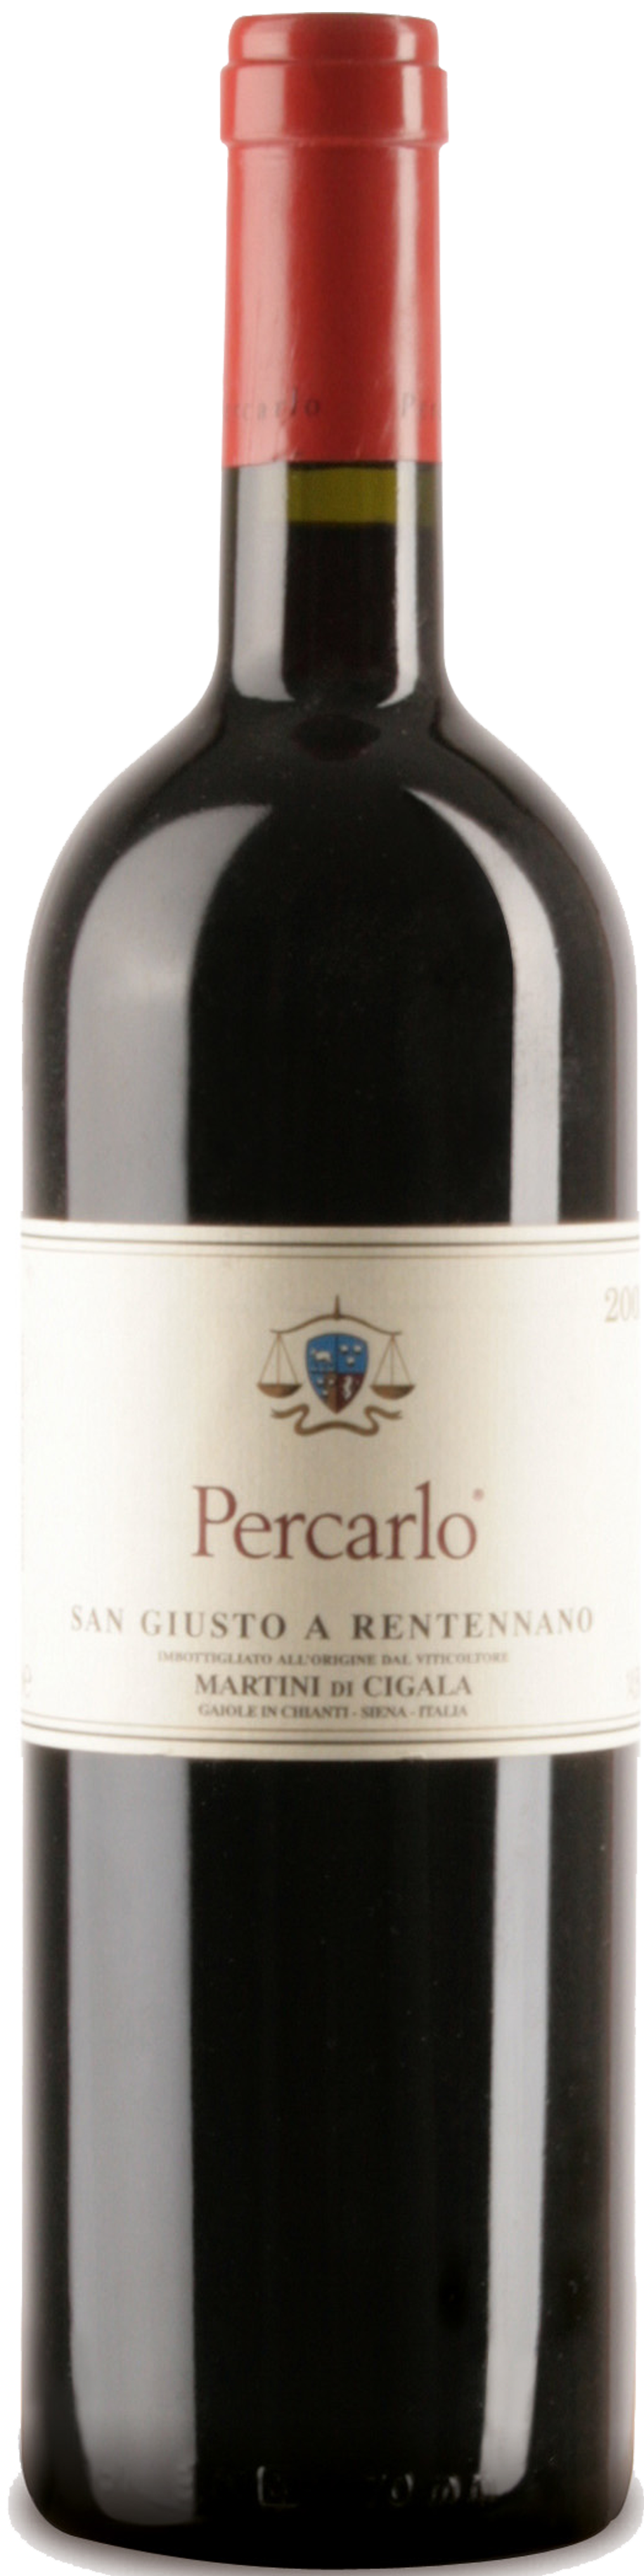 Bottle shot of 2009 Percarlo